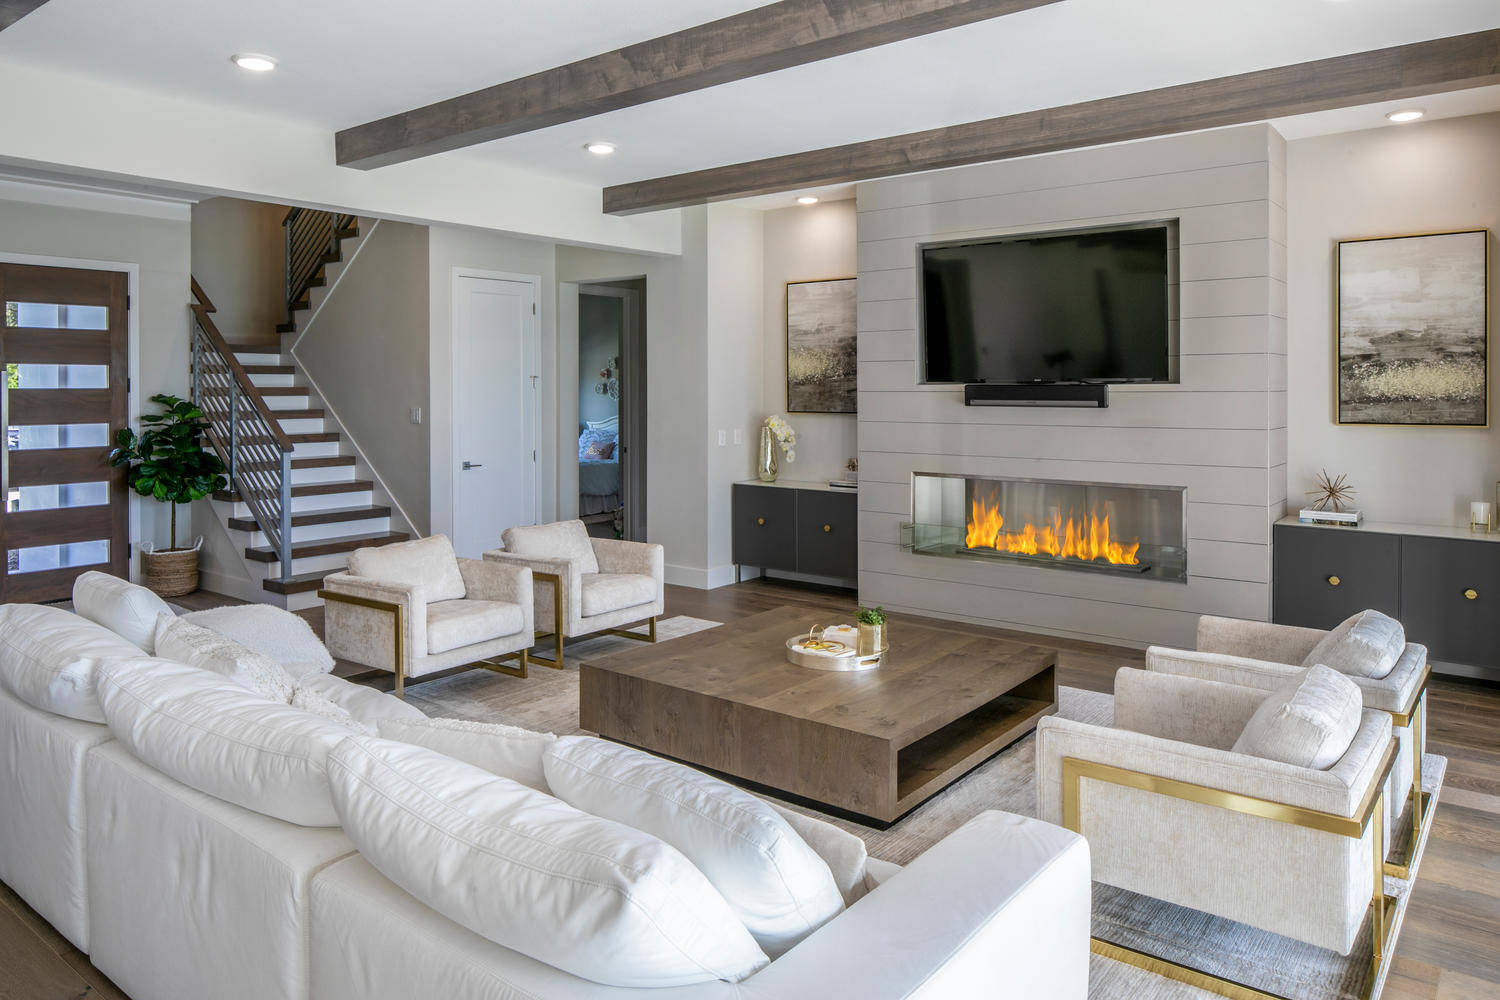 15 Modern Living Room Interior Design, How To Design A Modern Living Room